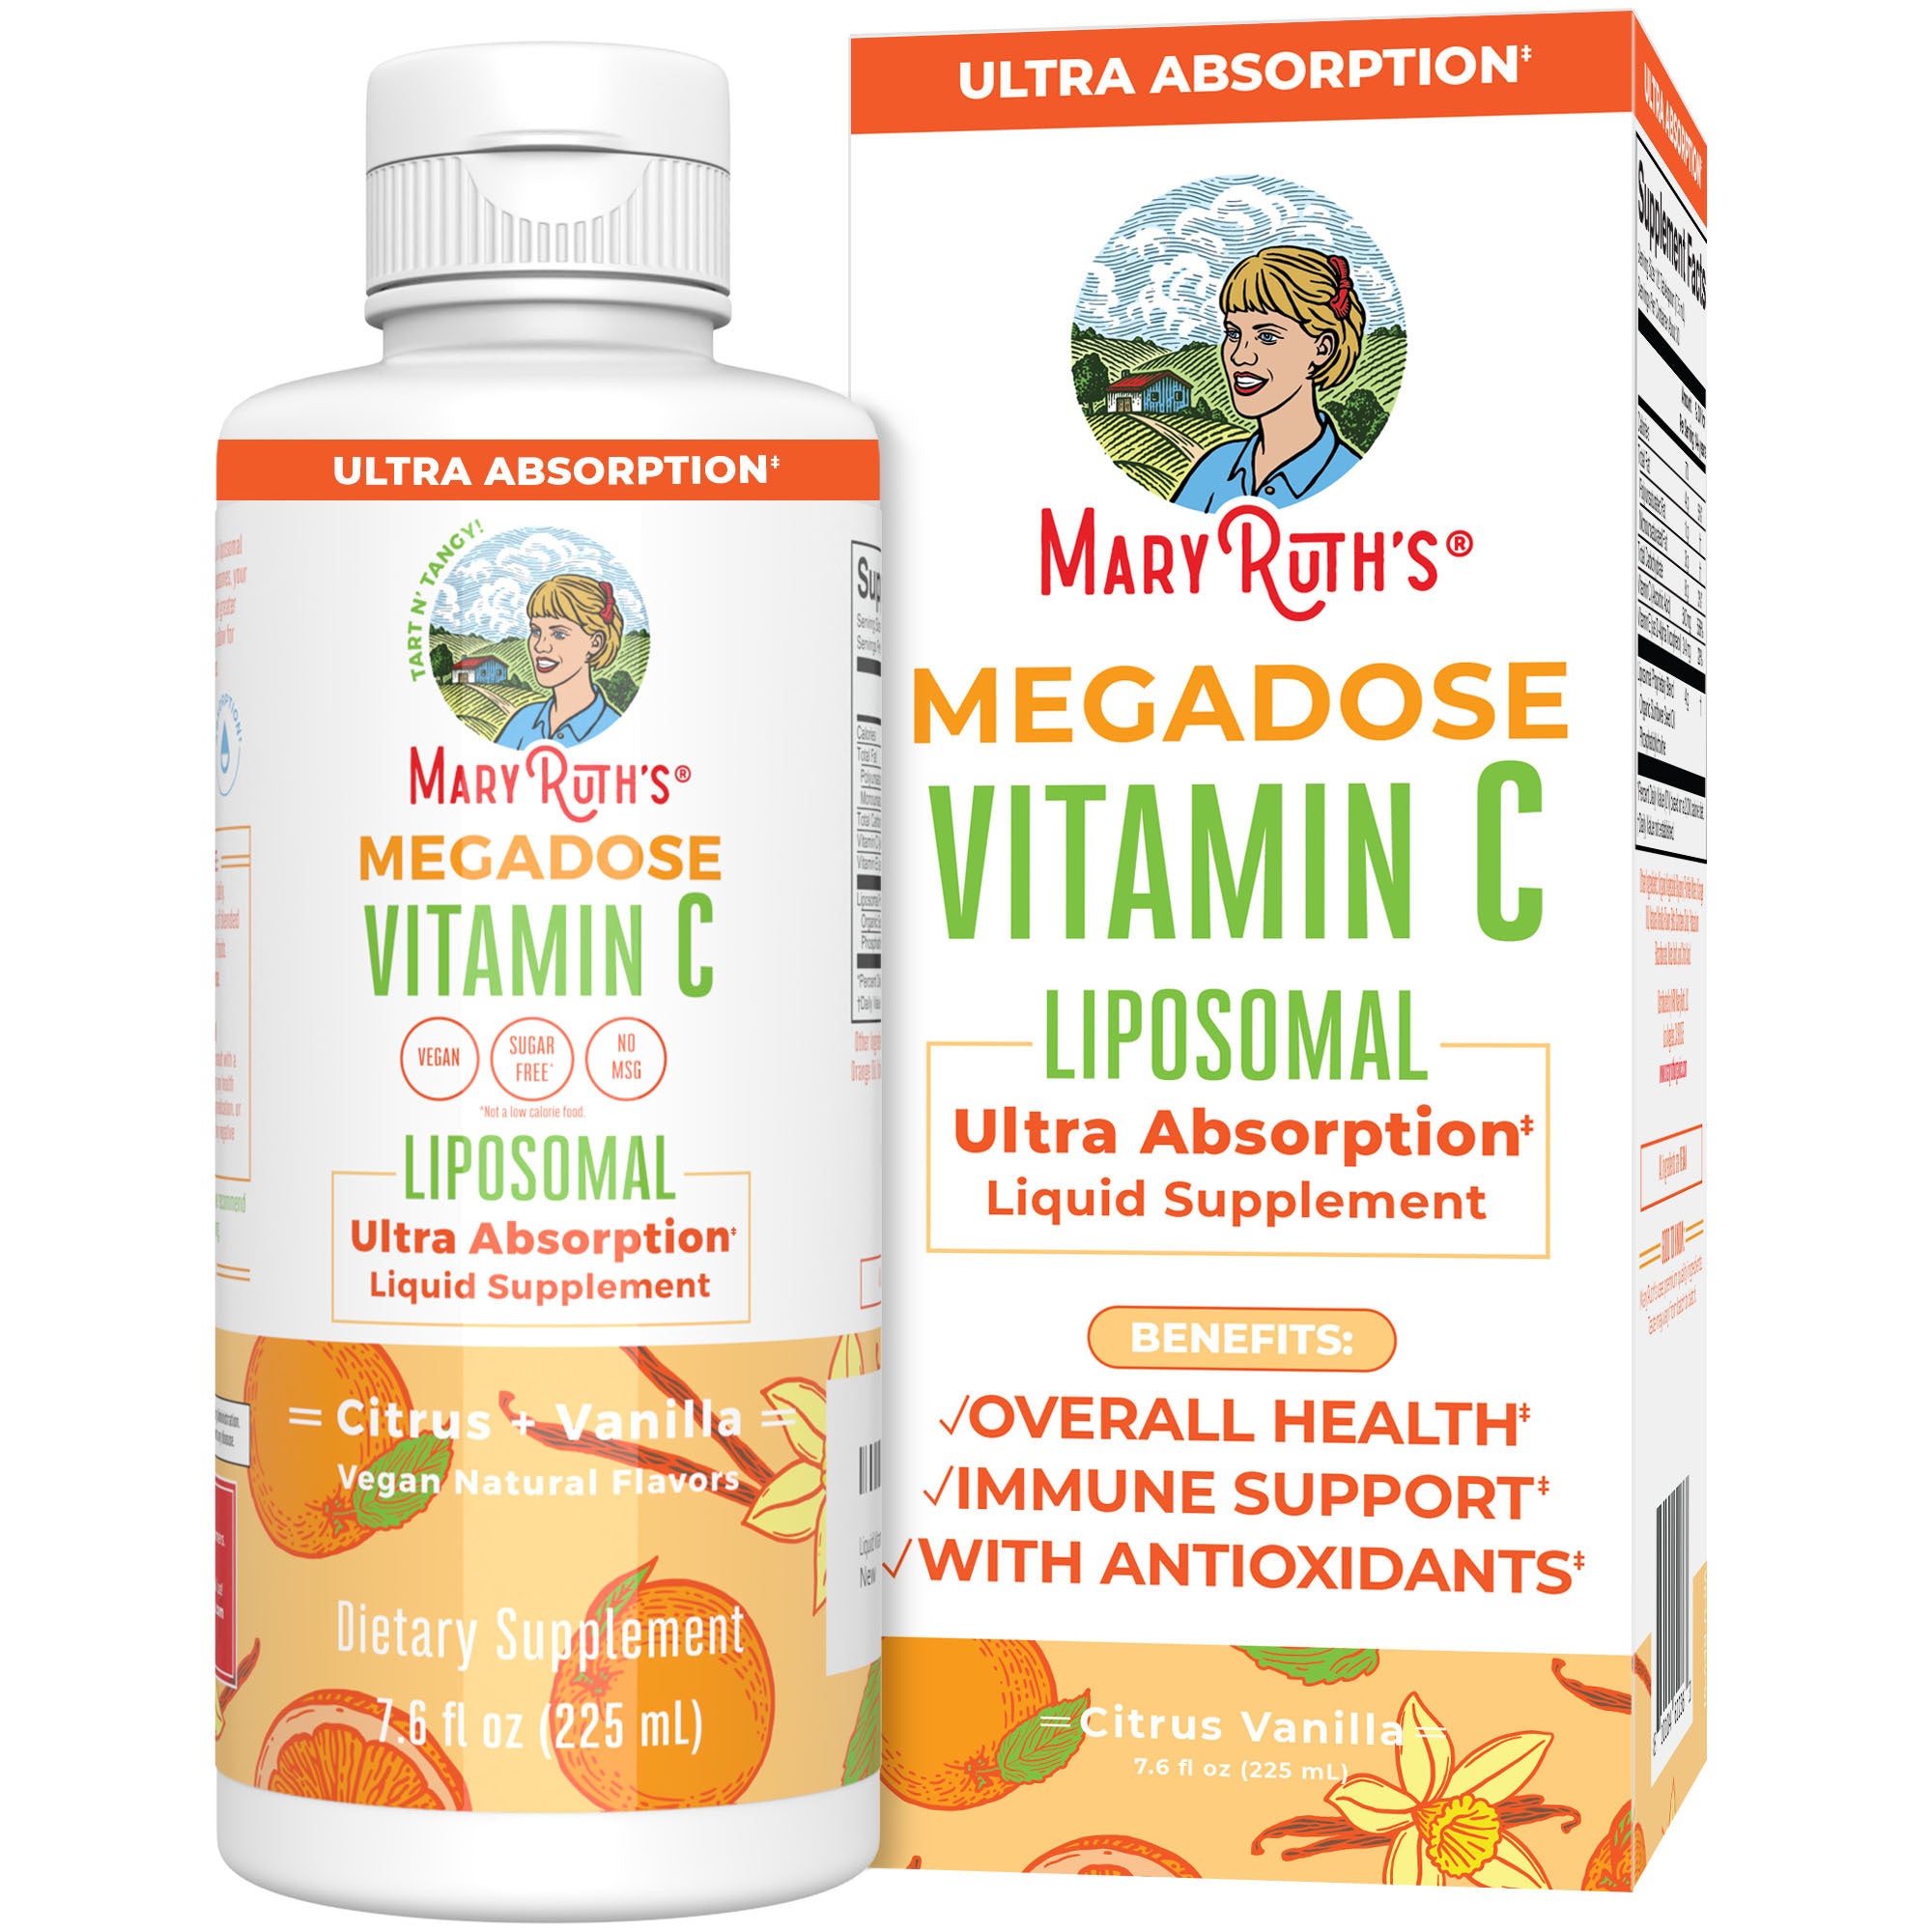 Megadose Vitamin C Liposomal